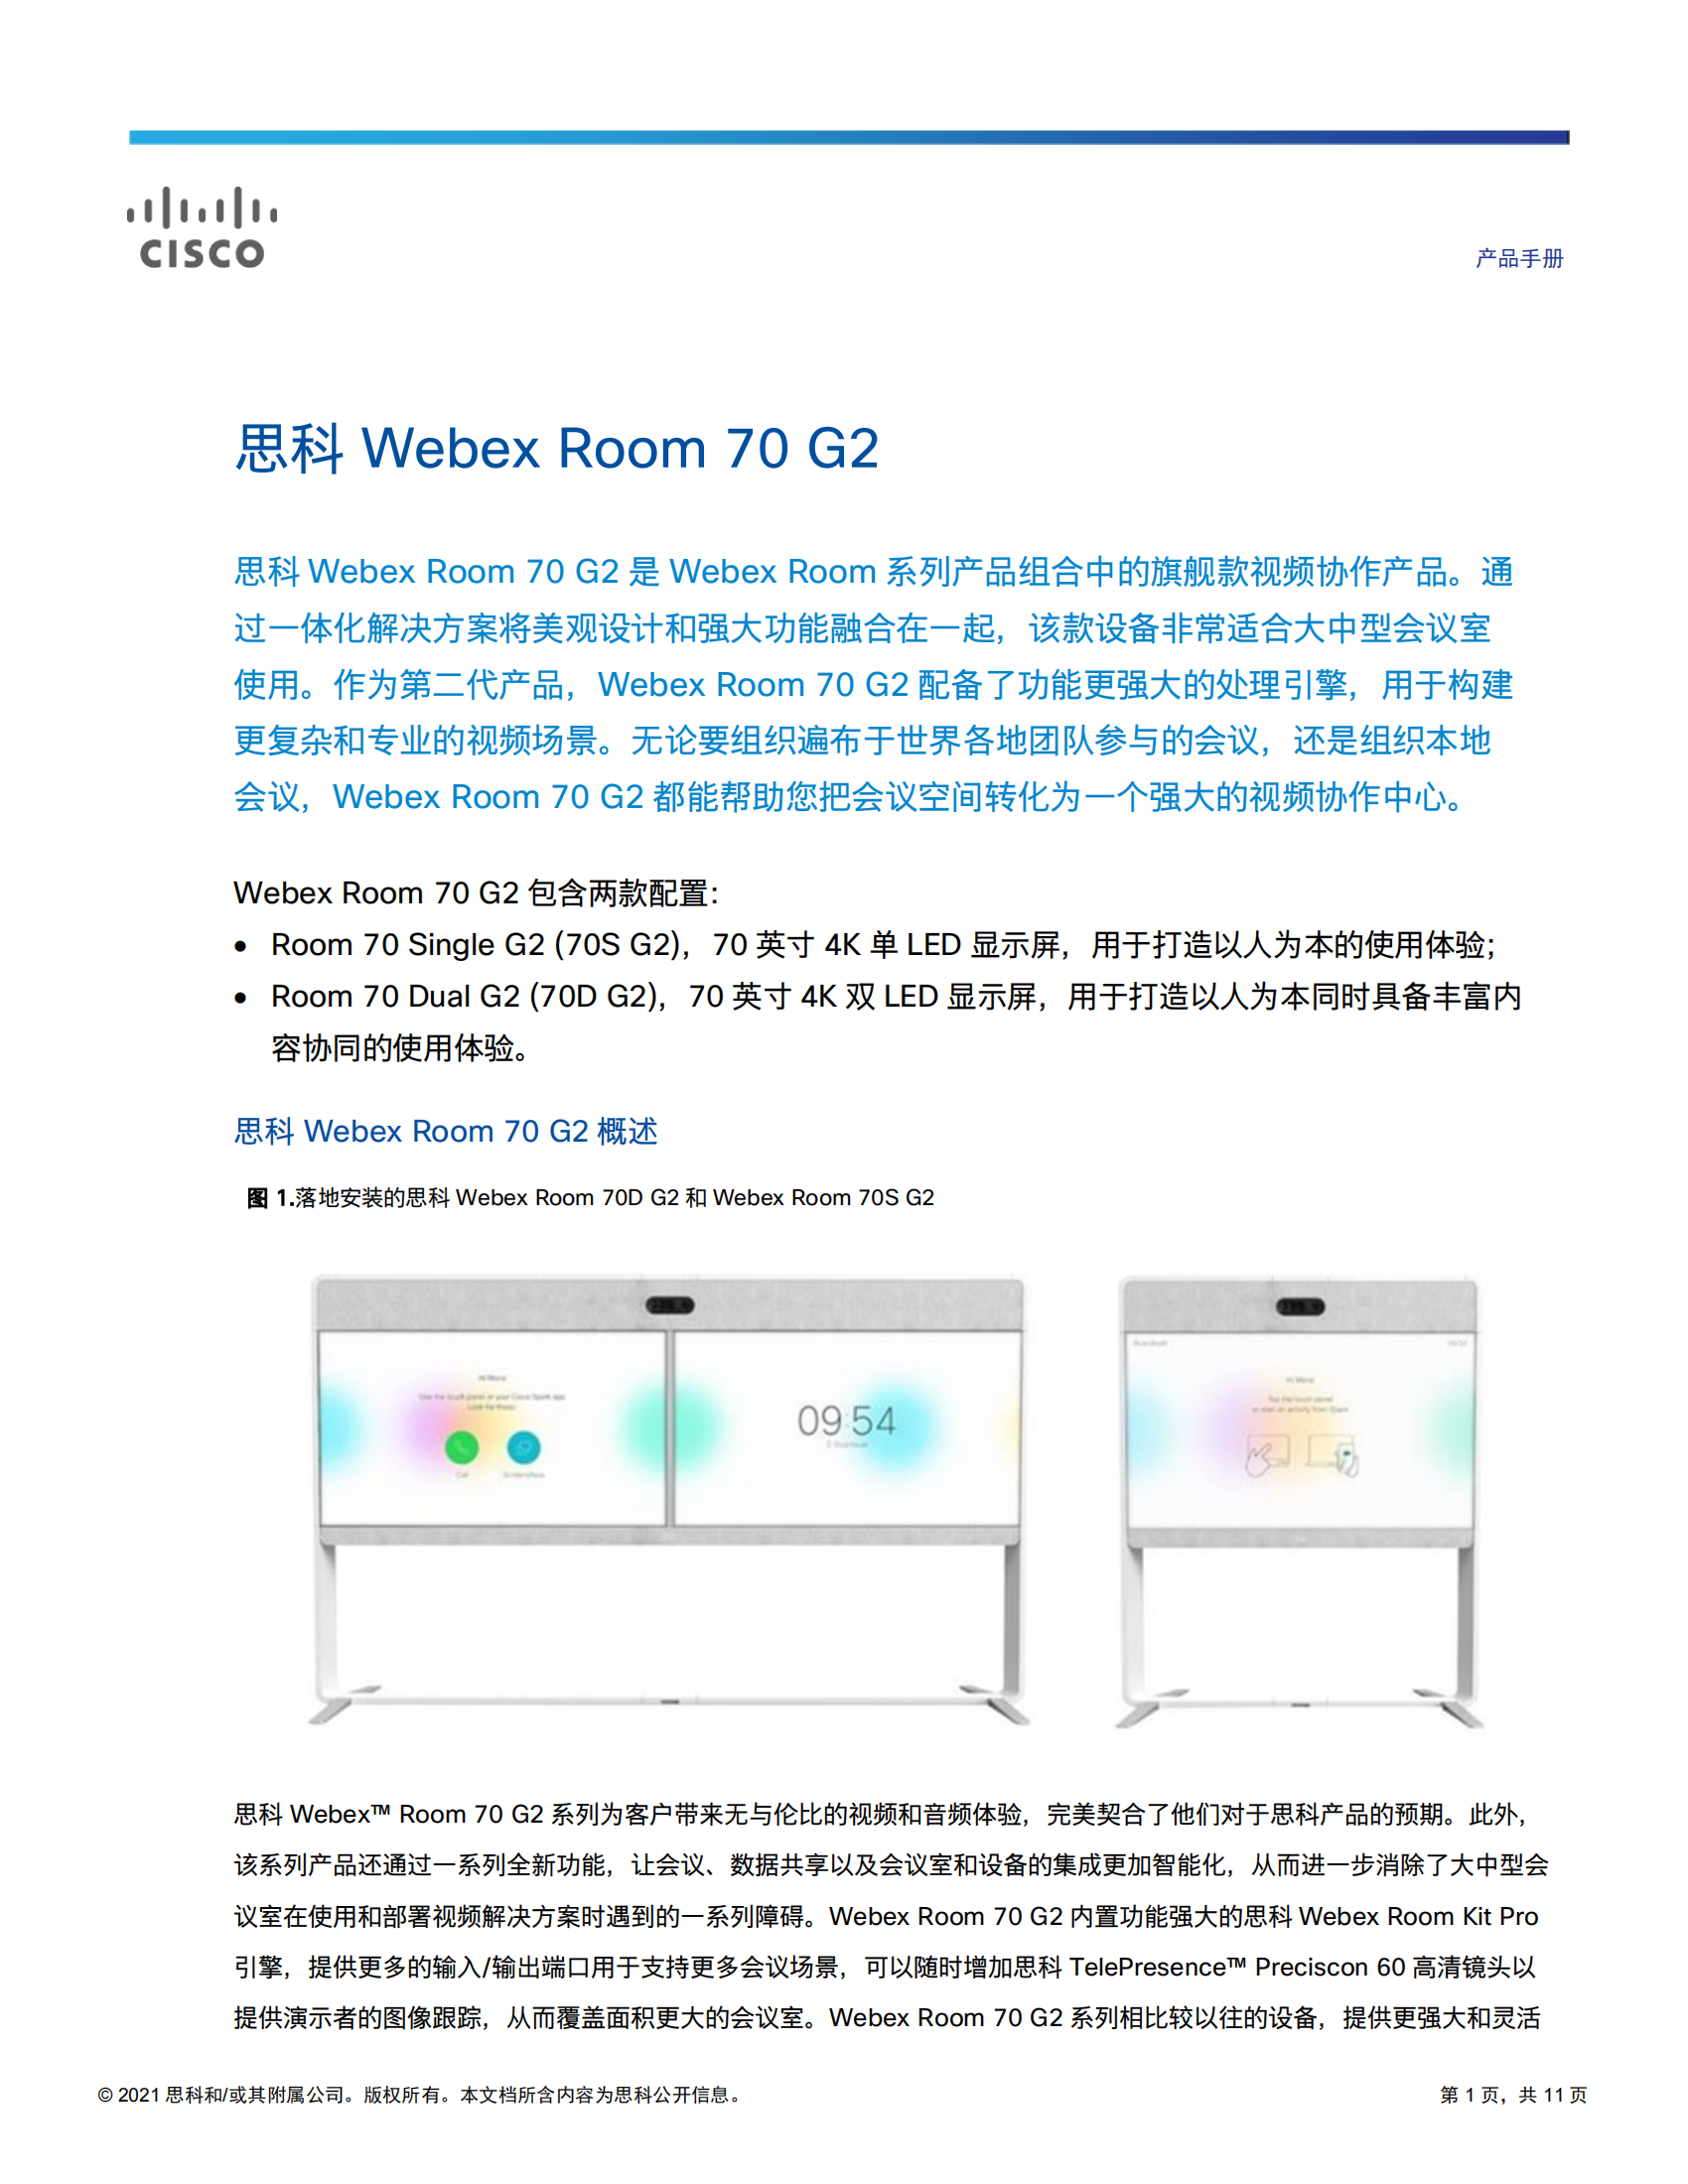 cisco-webex-room-70-g2-datasheet_00.png